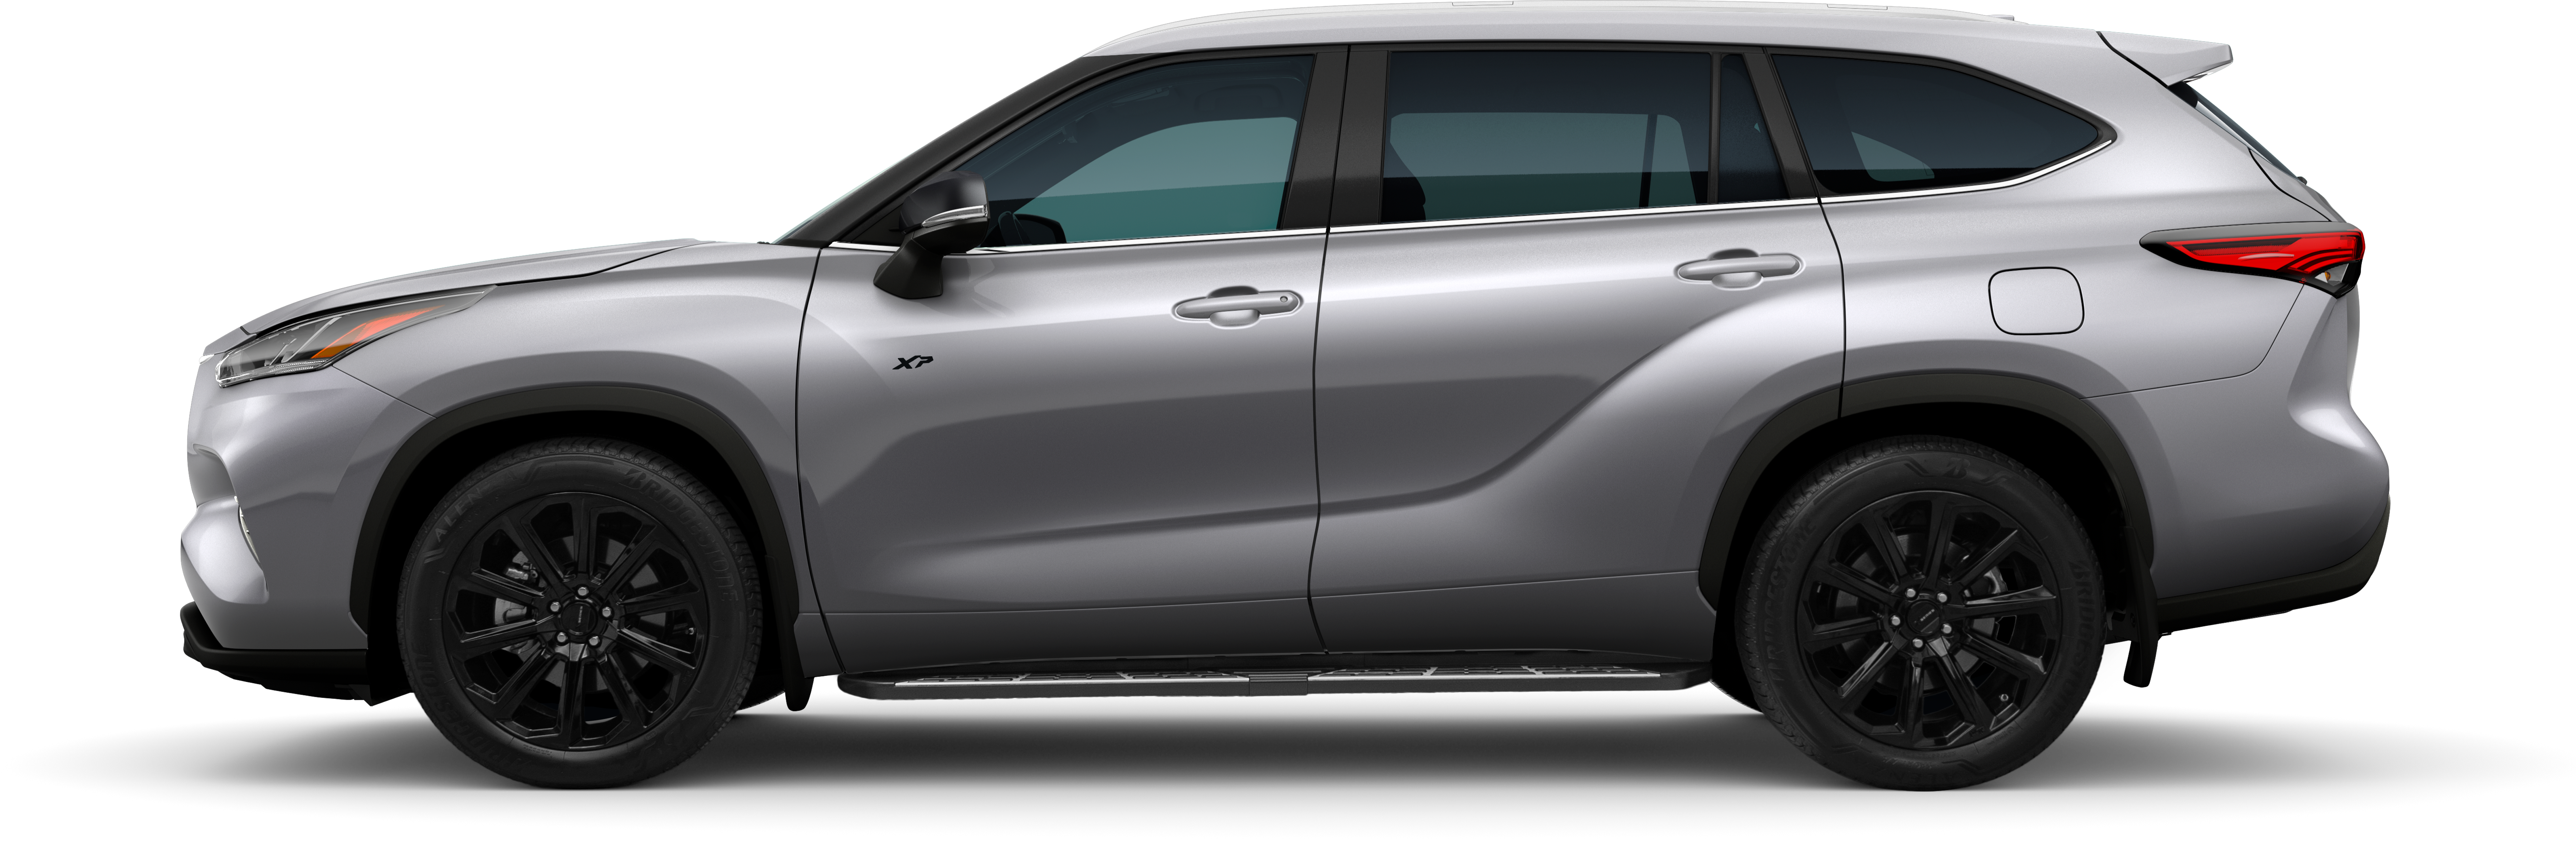 exterior shot of Silver Toyota Highlander XP Series